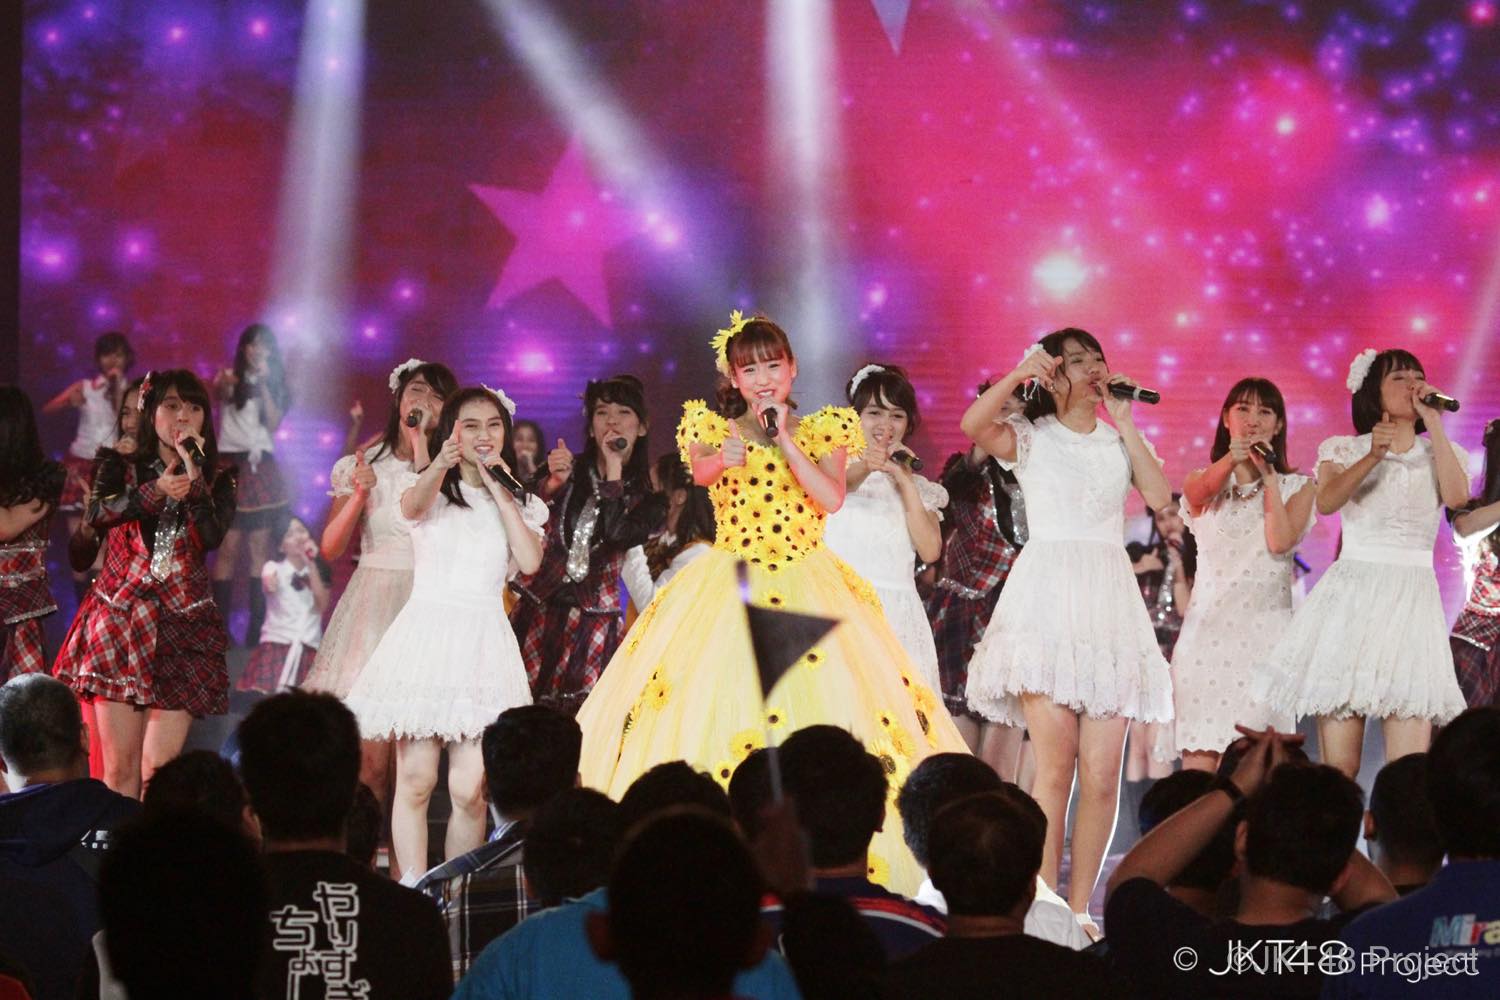 JKT48 Celebrates 5th Anniversary and Commemorates the Graduation of Haruka Nakagawa